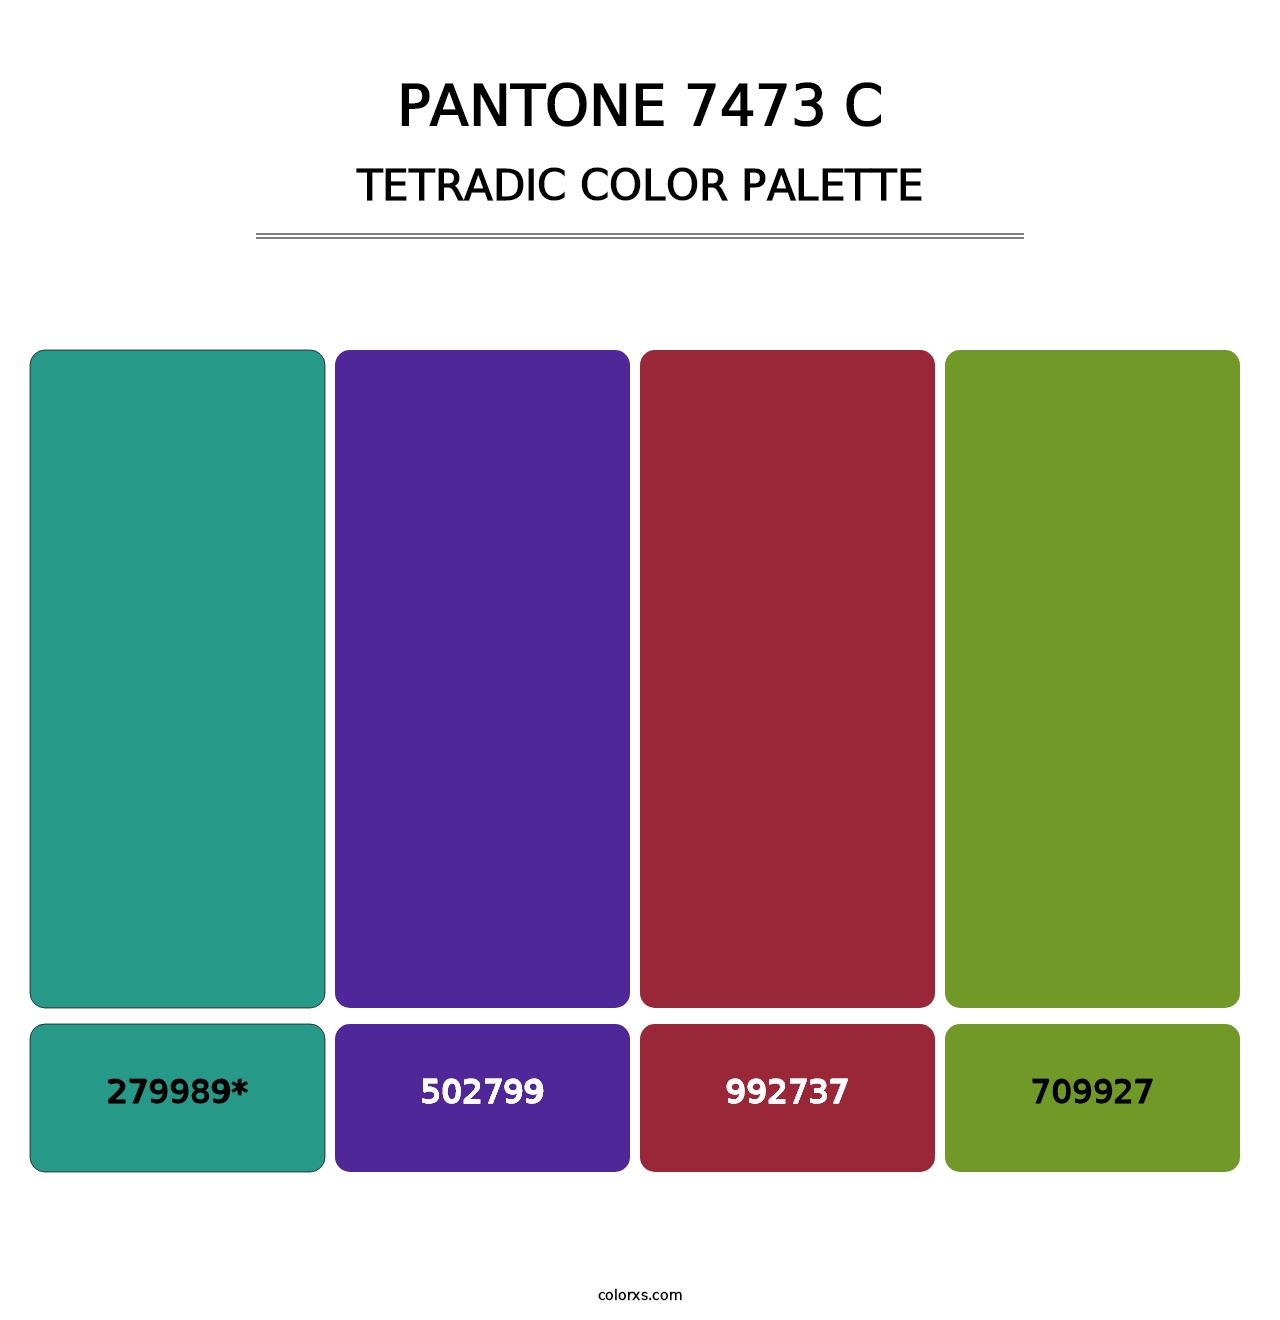 PANTONE 7473 C - Tetradic Color Palette